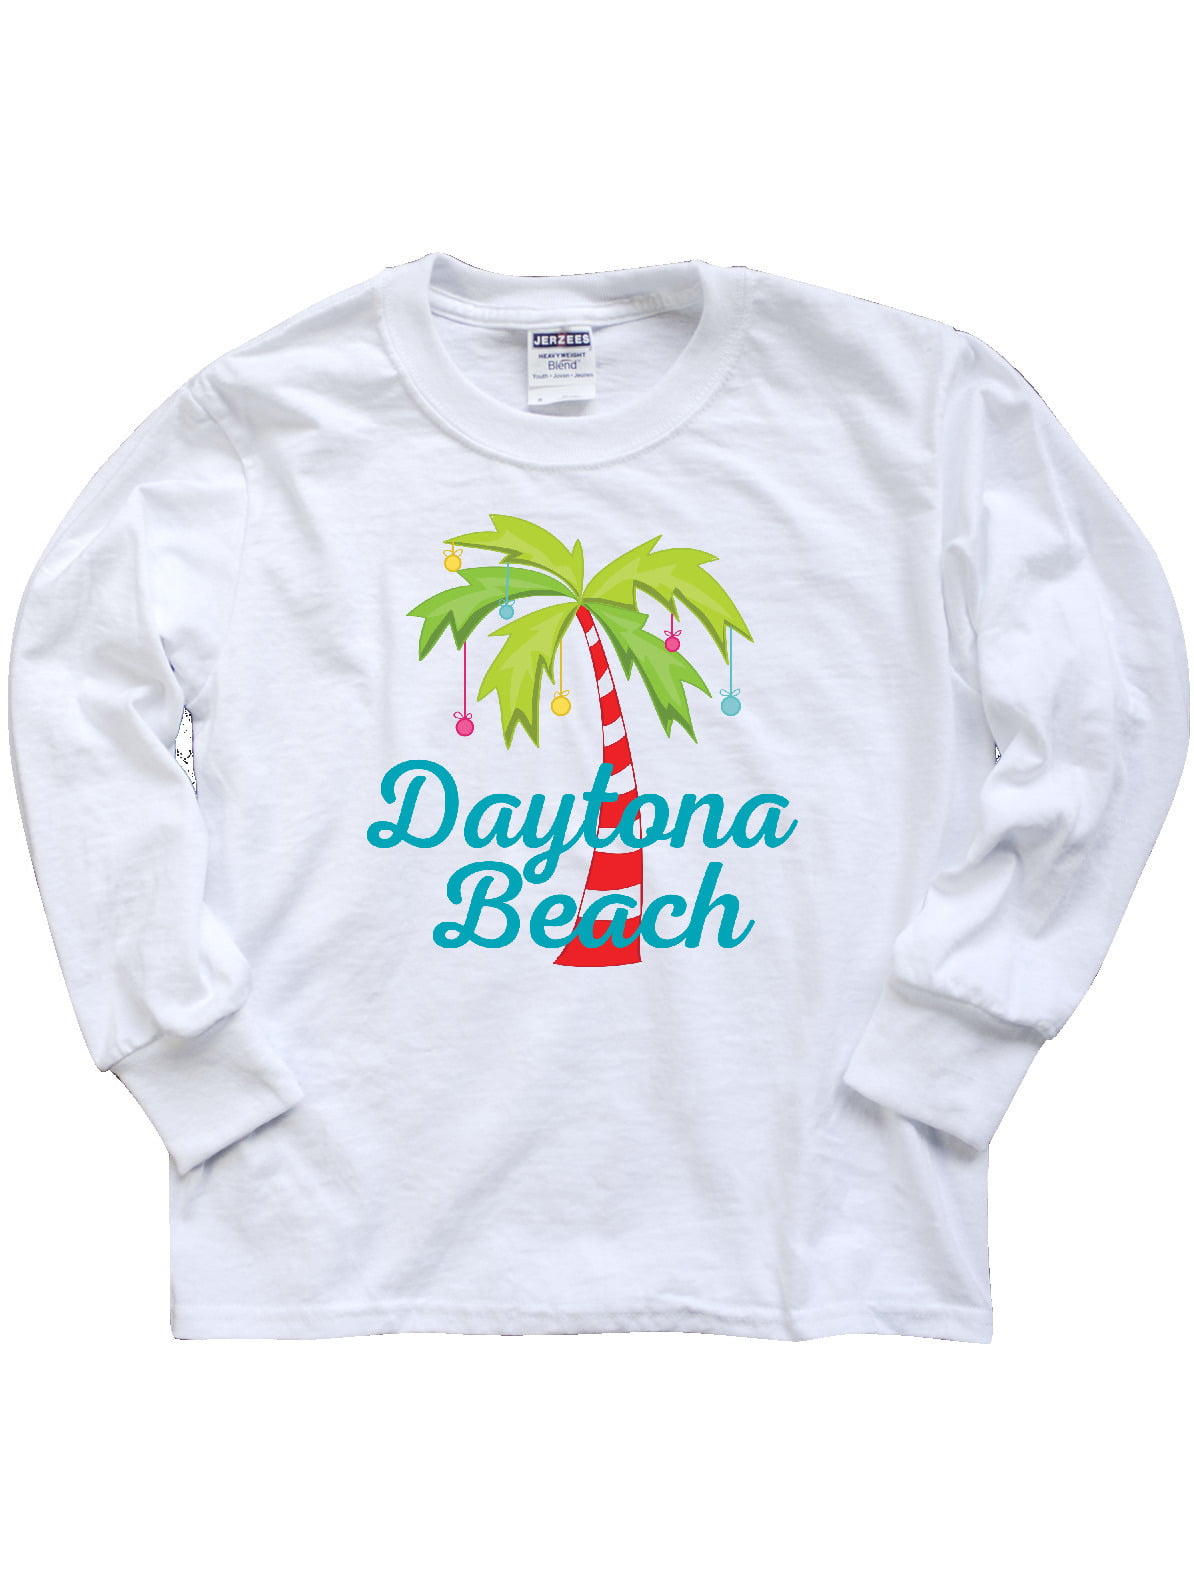 Daytona Beach Florida Palm Trees Ocean Beach Water Relax Vacation Hoodies for Men